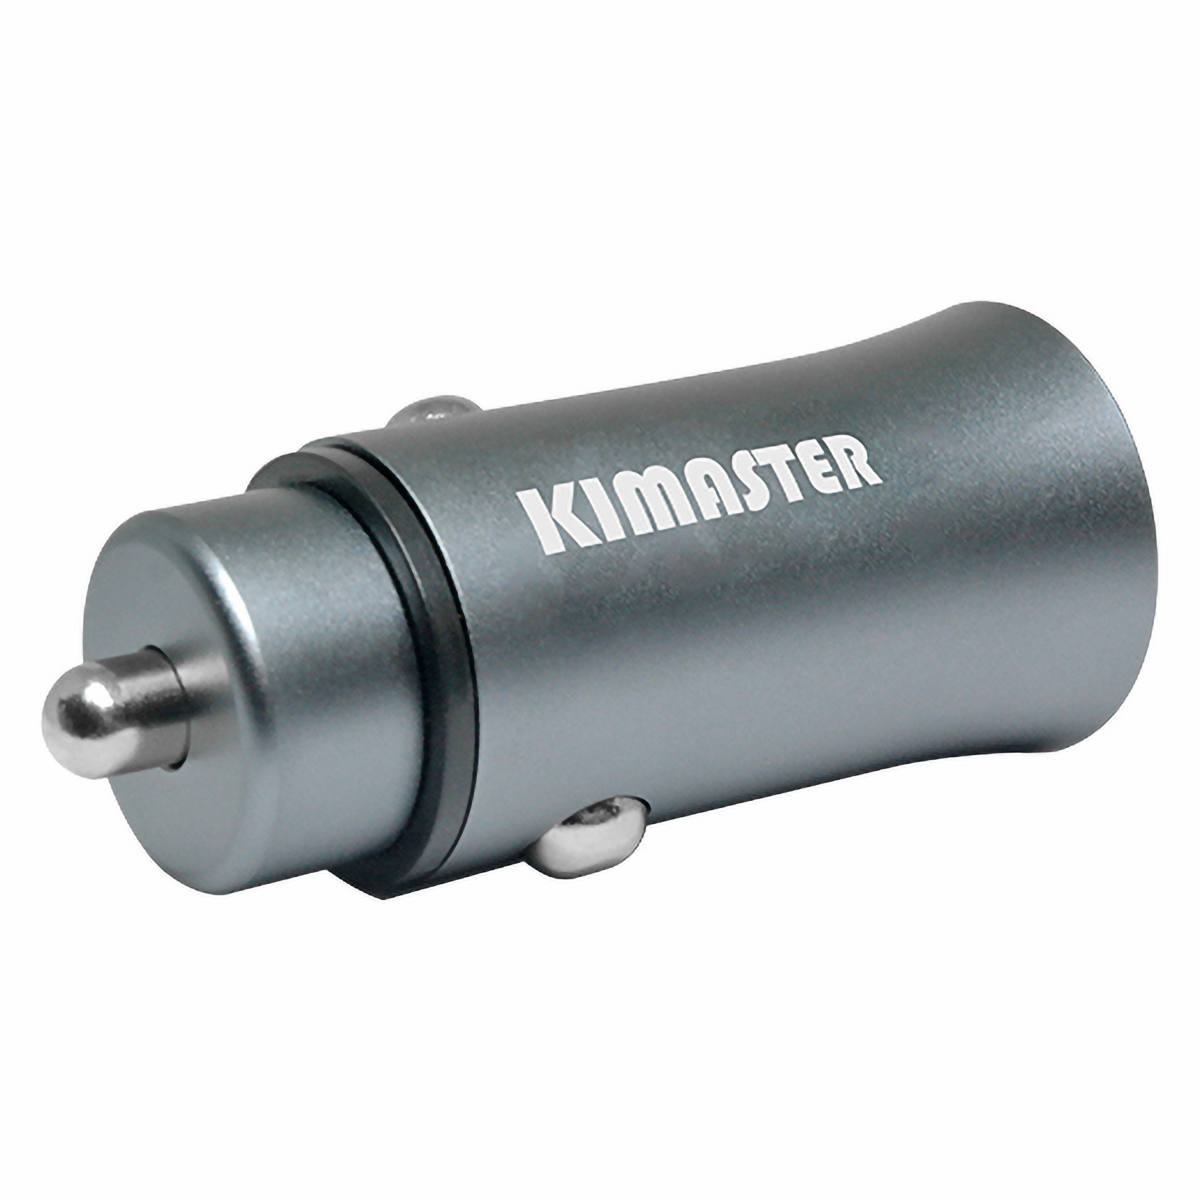 Carregador Veicular Turbo Universal 1 Porta USB Kimaster CV300